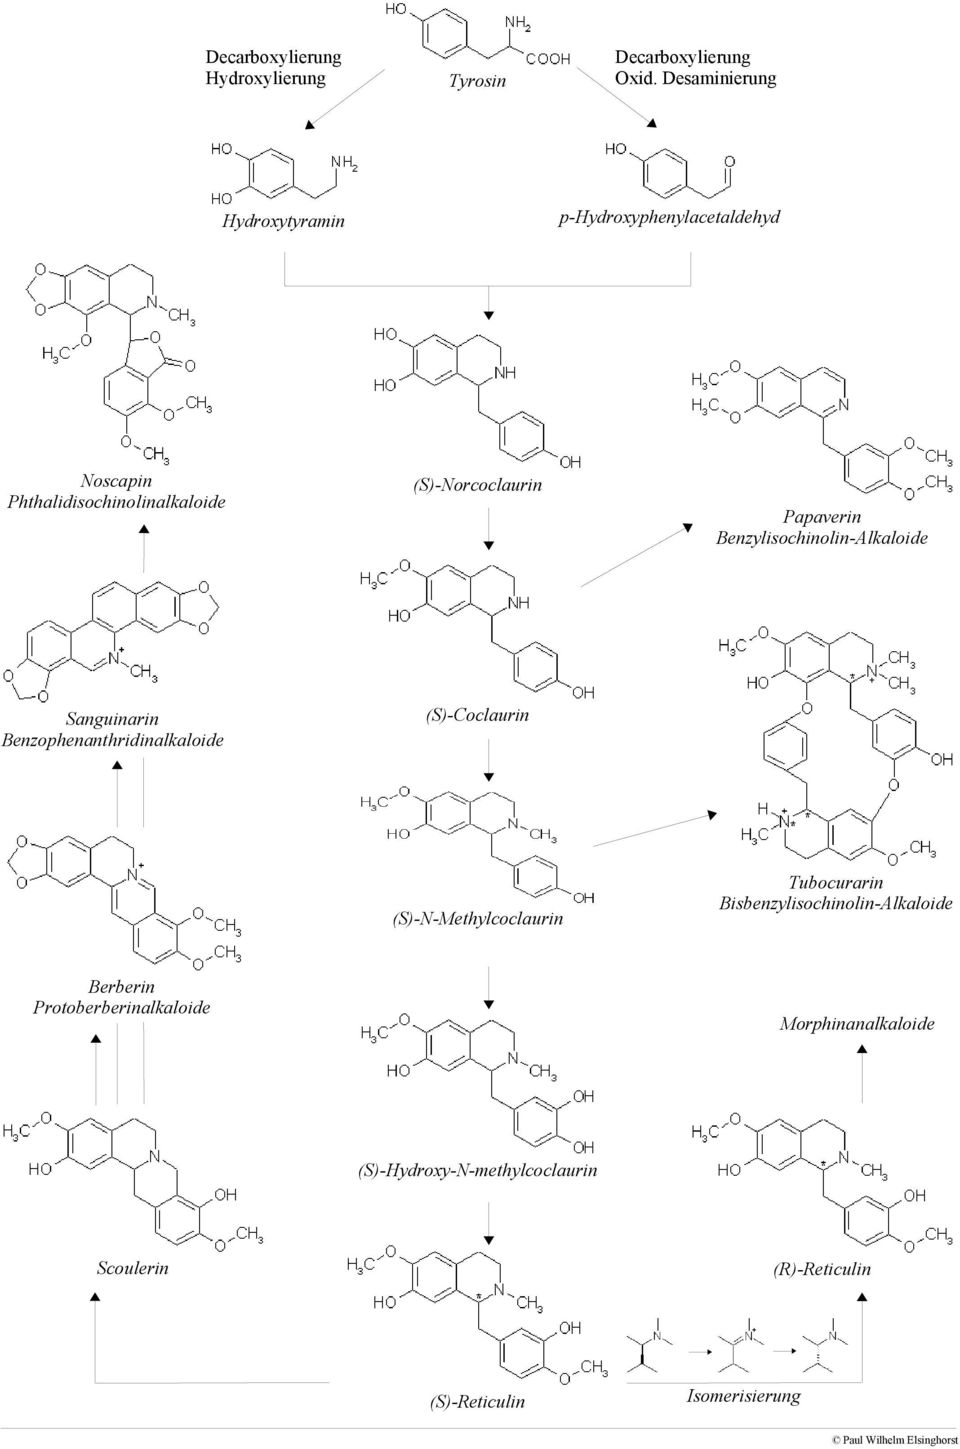 Papaverin Benzylisochinolin-Alkaloide Sanguinarin Benzophenanthridinalkaloide (S)-Coclaurin (S)-N-Methylcoclaurin